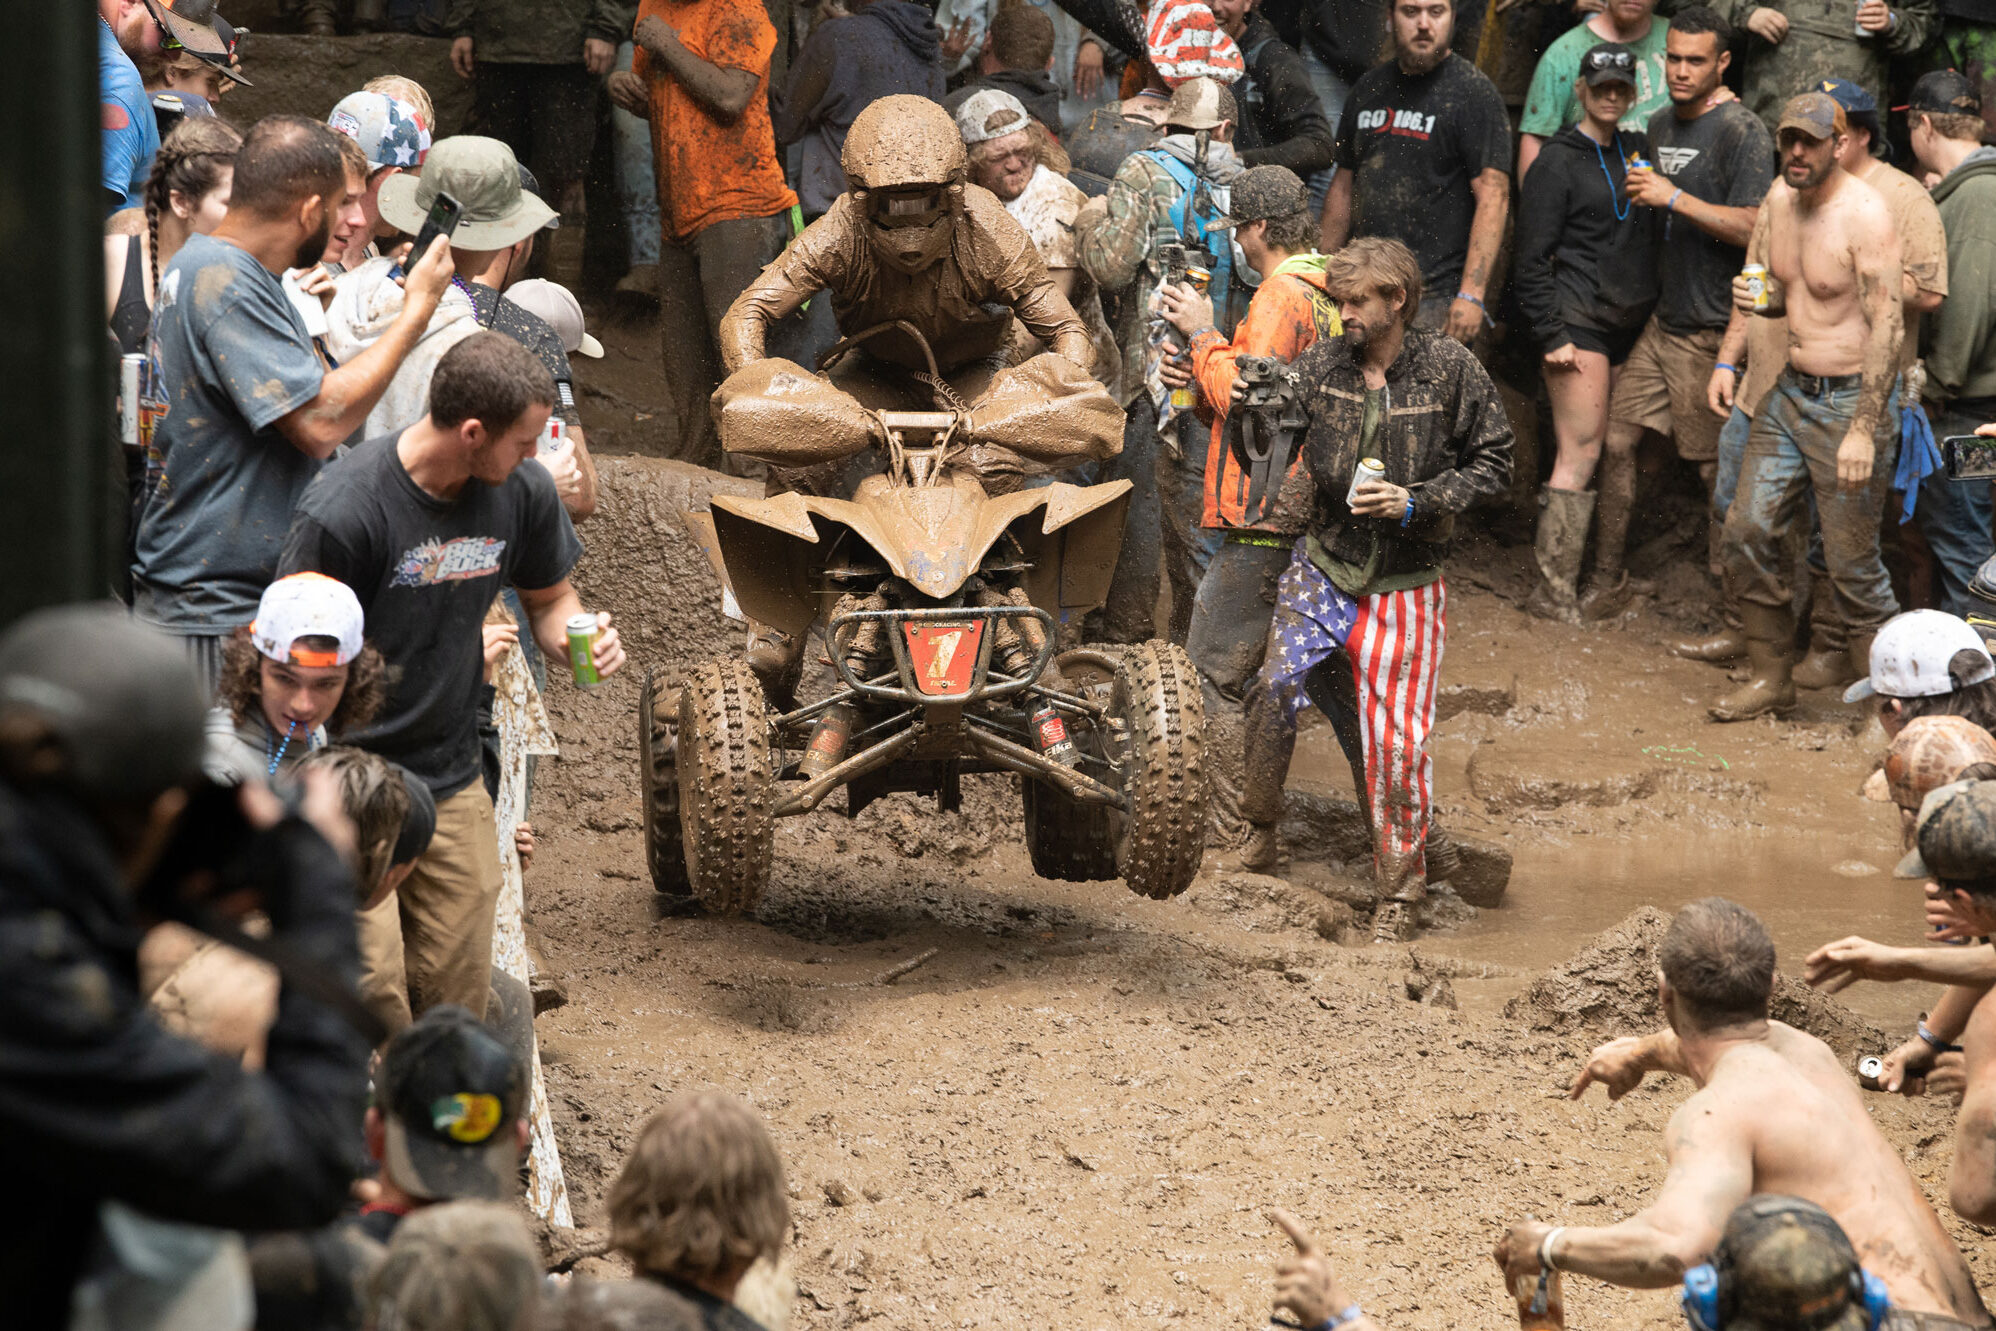 Brycen Neal racing through mud